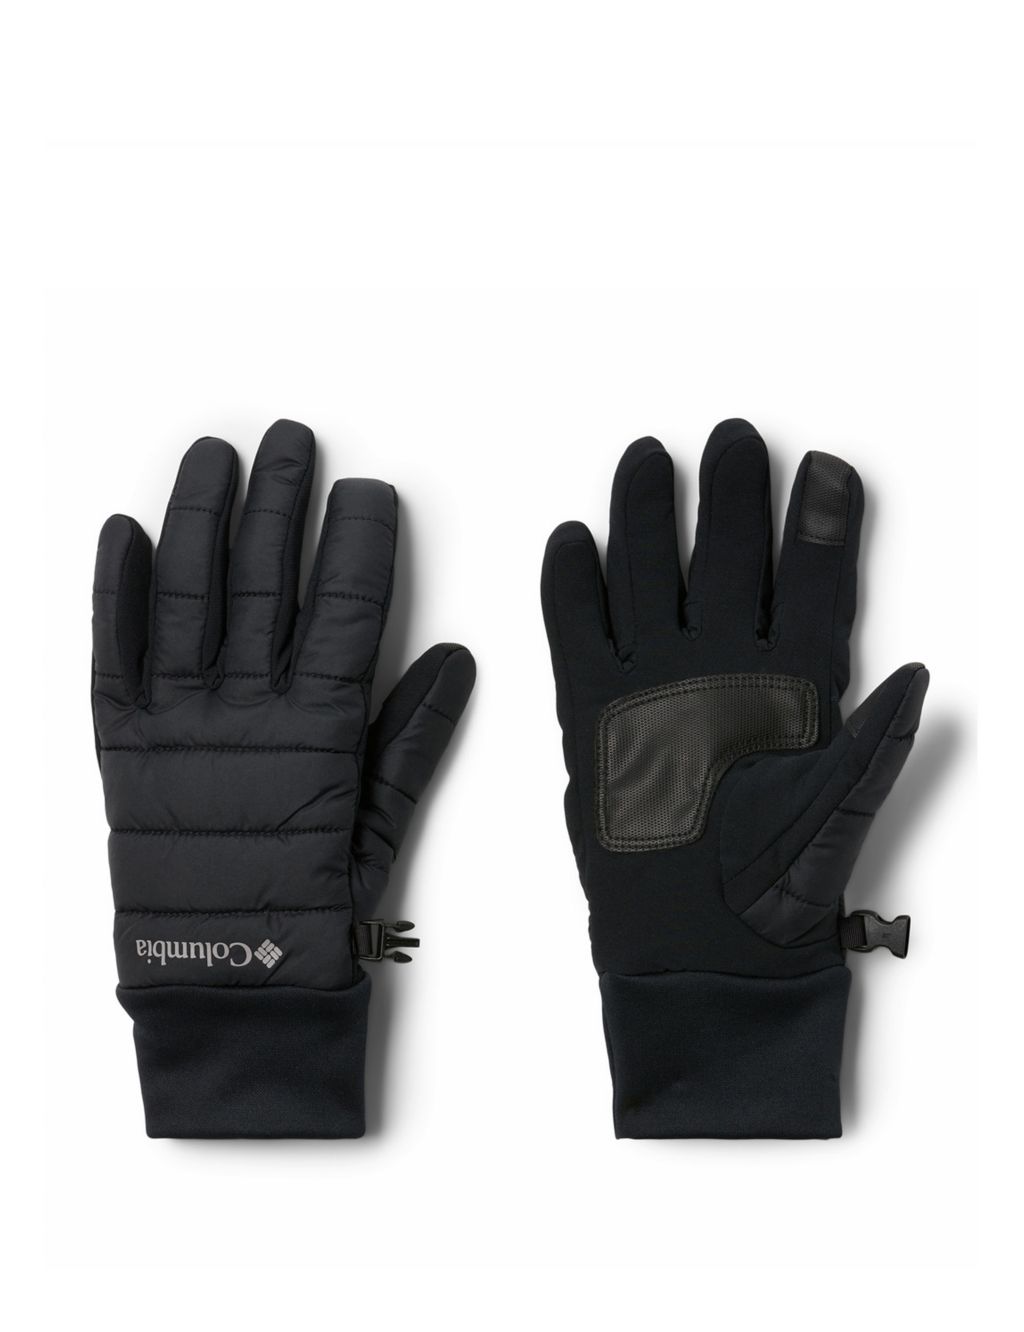 Powder Lite Touchscreen Gloves image 1